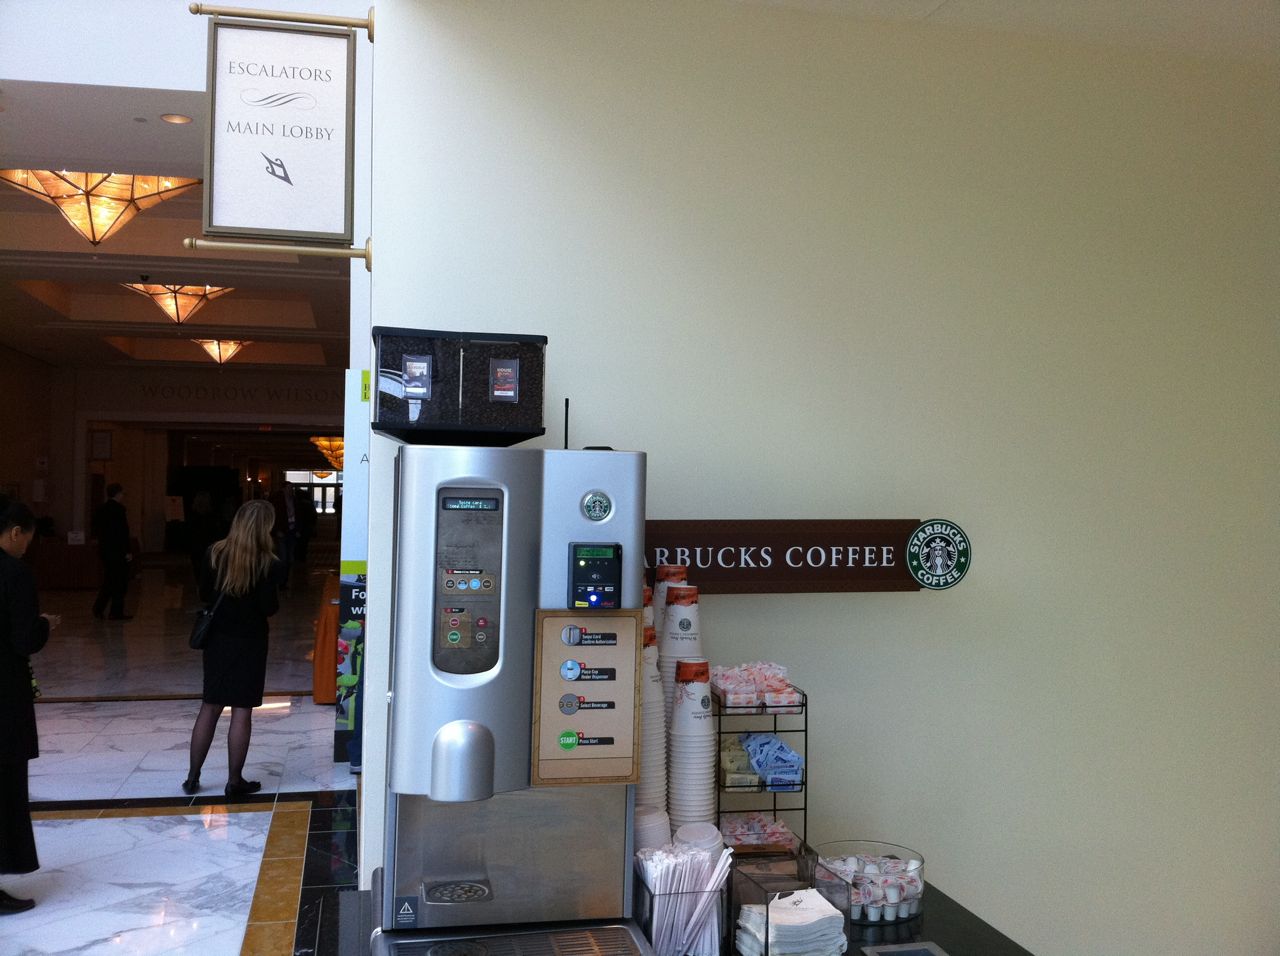 Starbucks Auto Vending Machine and a note on Design | Rajesh Setty